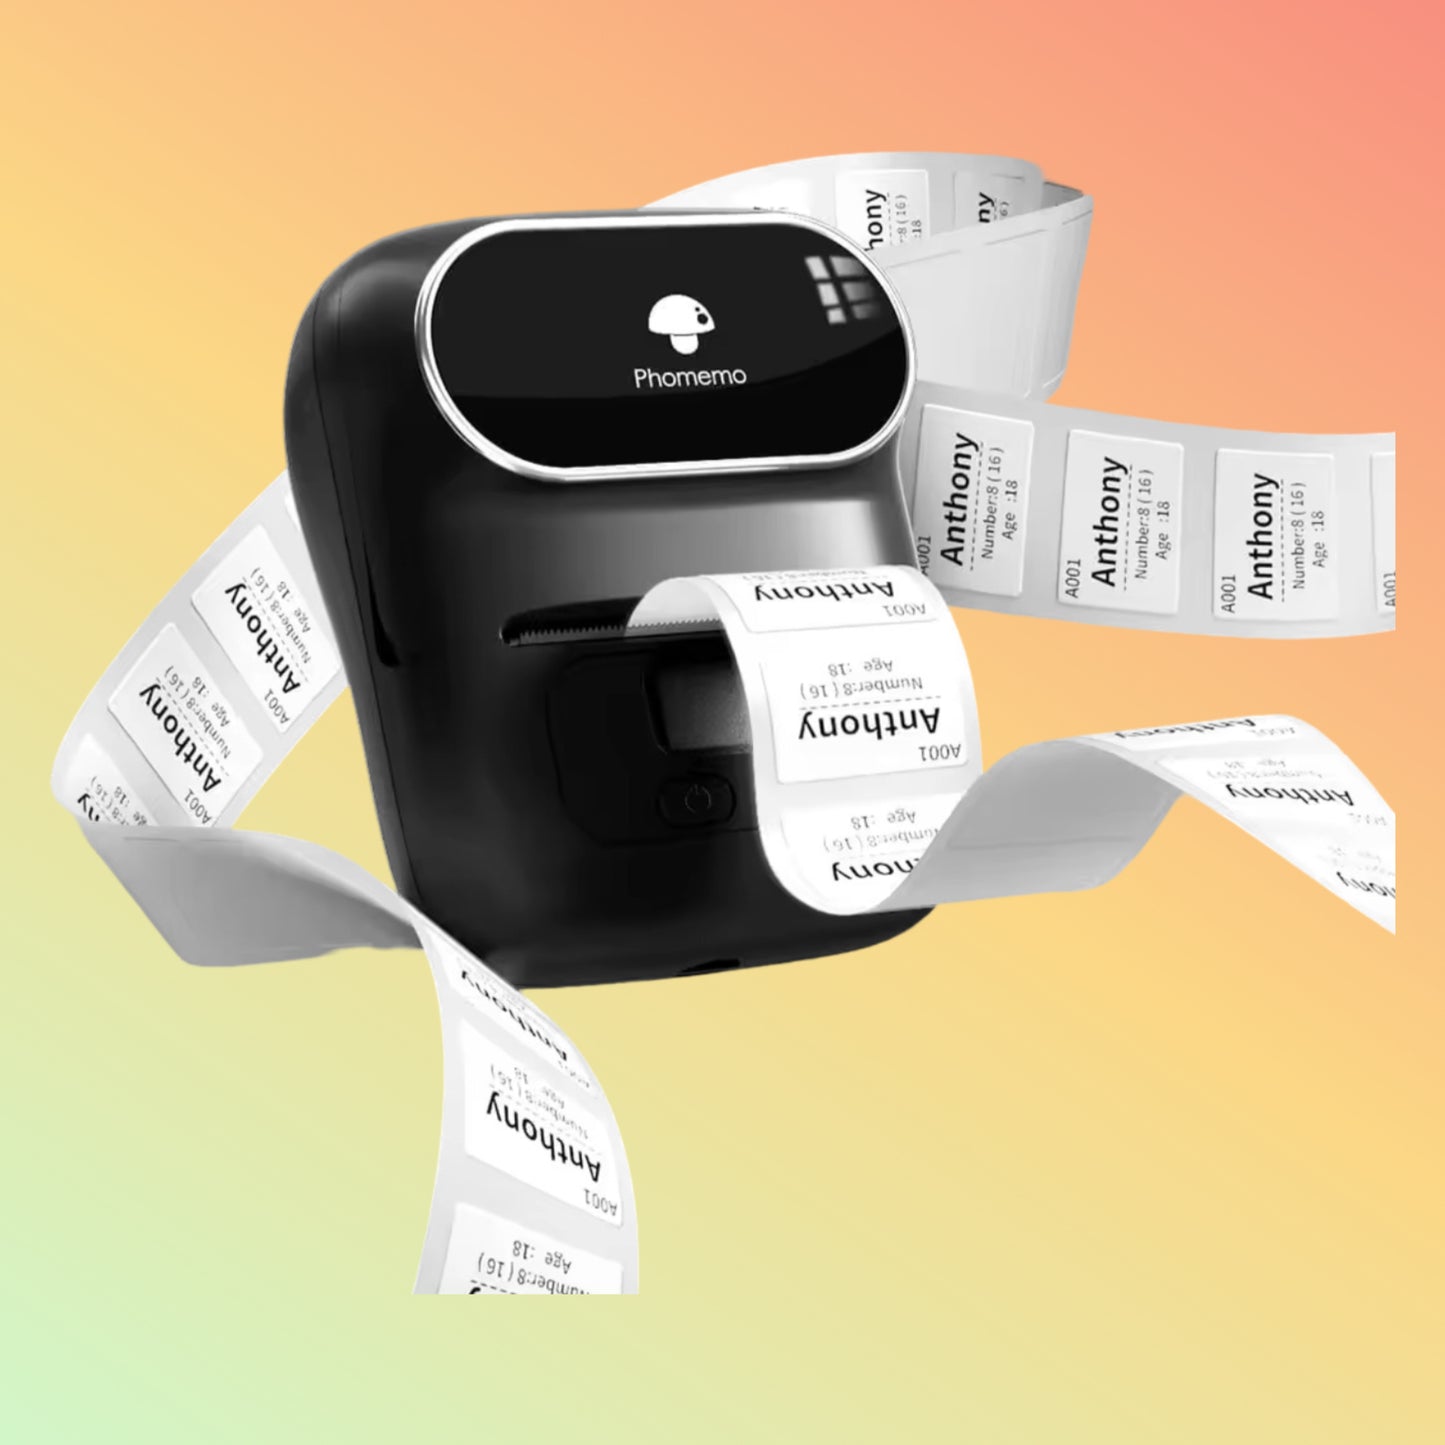 Phomemo M110 Label Printer – Compact, Versatile Barcode & Label Maker